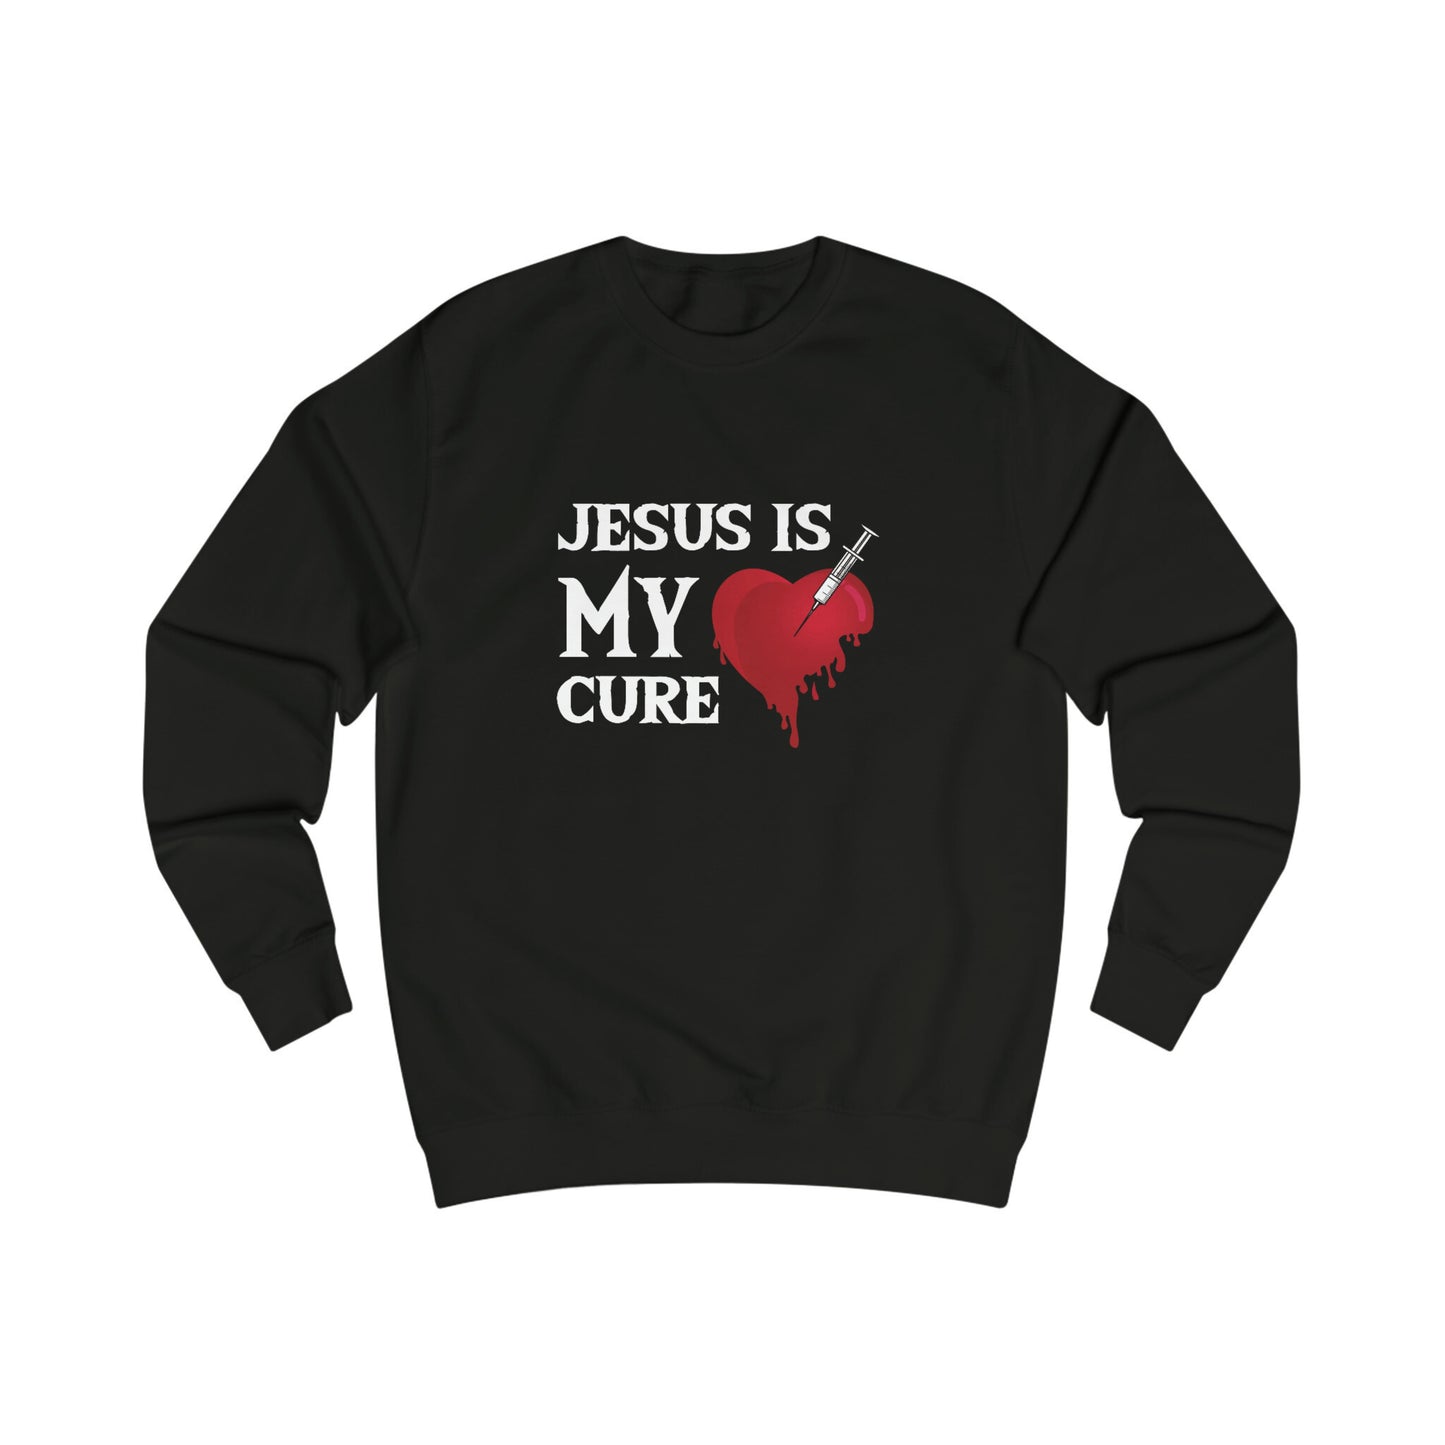 JESUS IS MY CURE Premium Unisex Sweatshirt